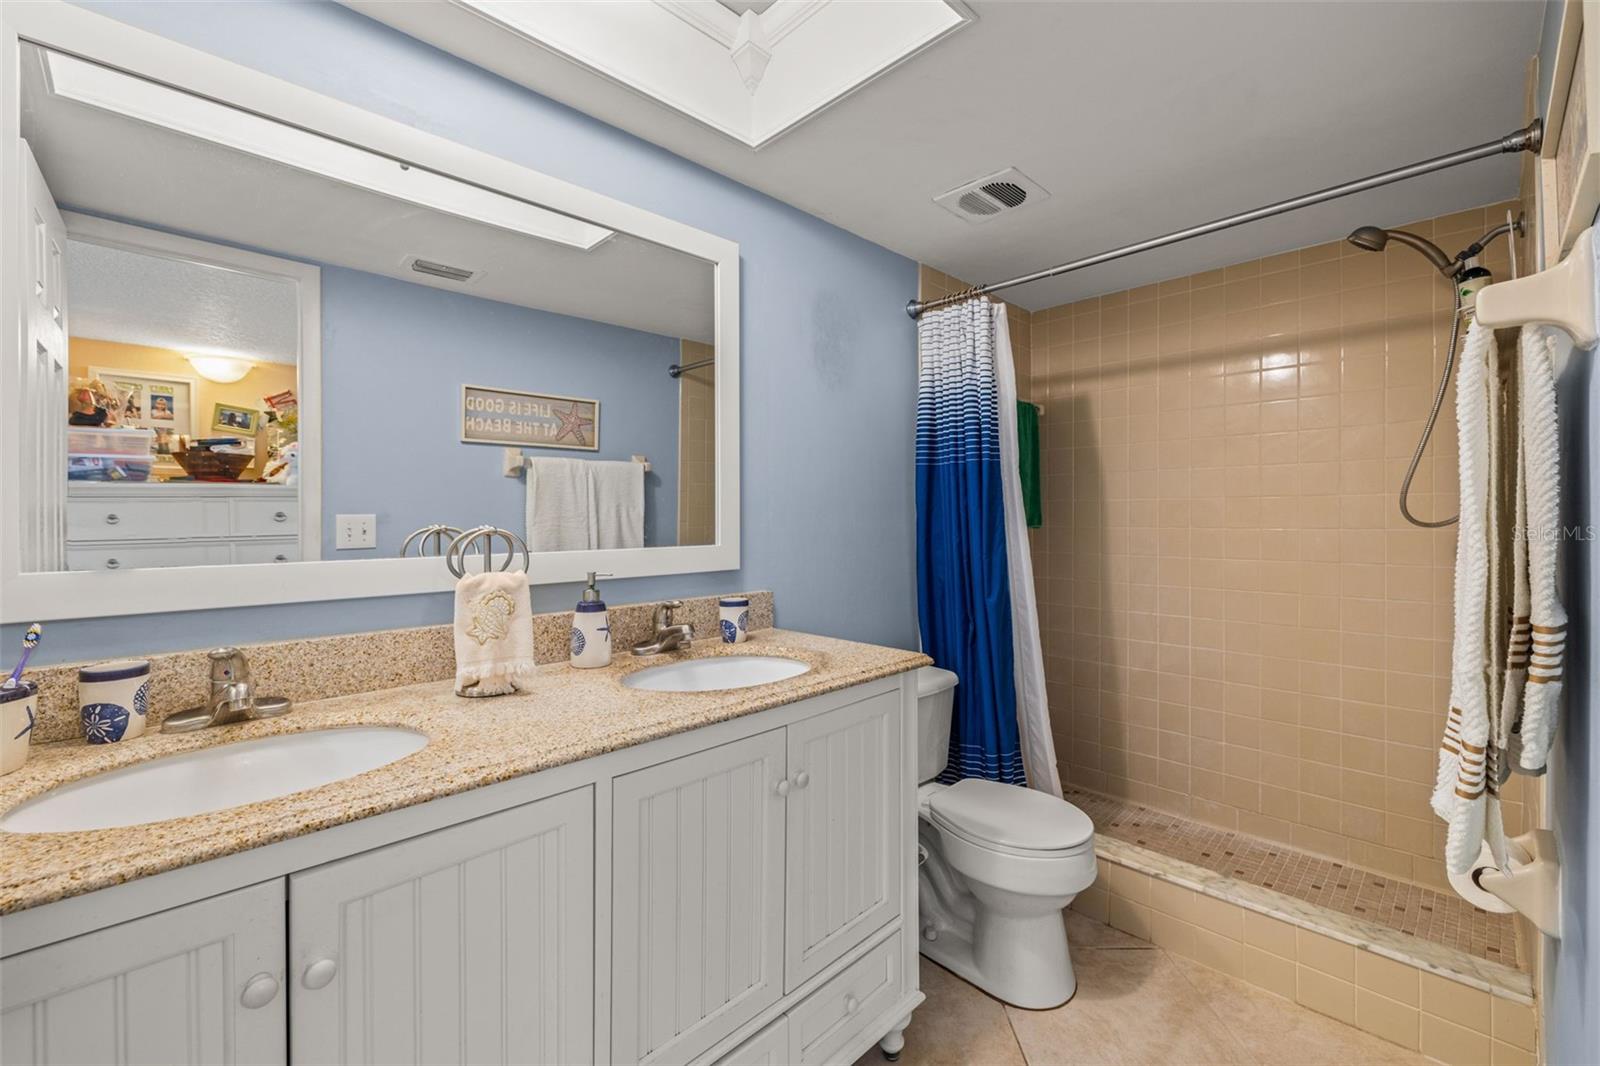 Dual sink vanity, walk-in shower, comfort height toilet, updated lighting and vanity mirror.